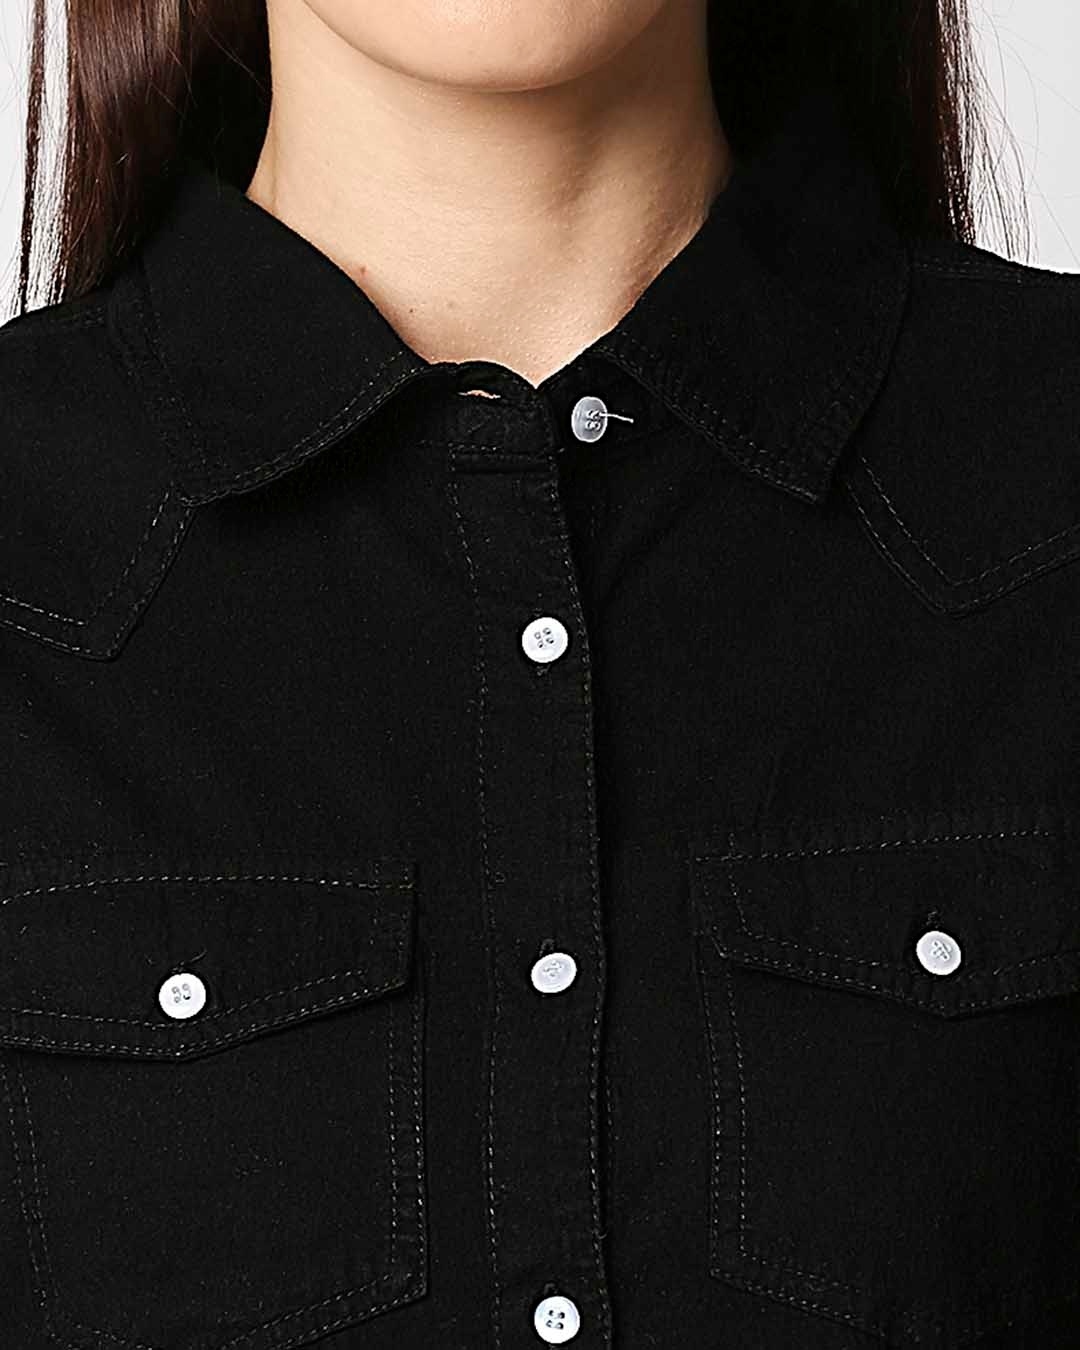 Shop Women's Black Solid Shirt Dress